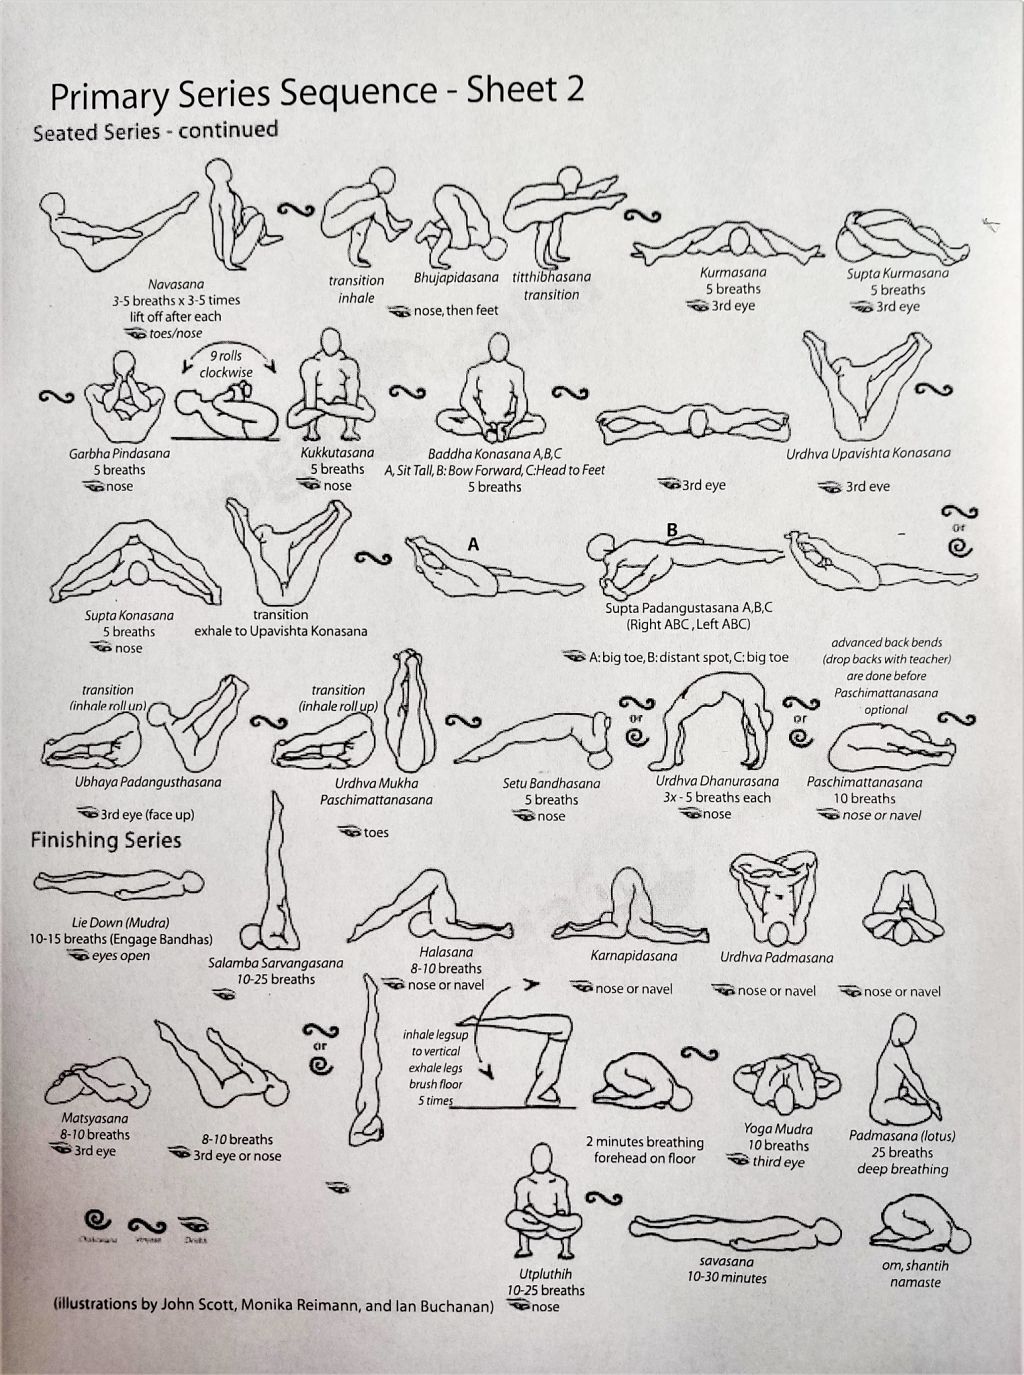 Ashtanga yoga asanas names & meanings. Yogasana poses of first series